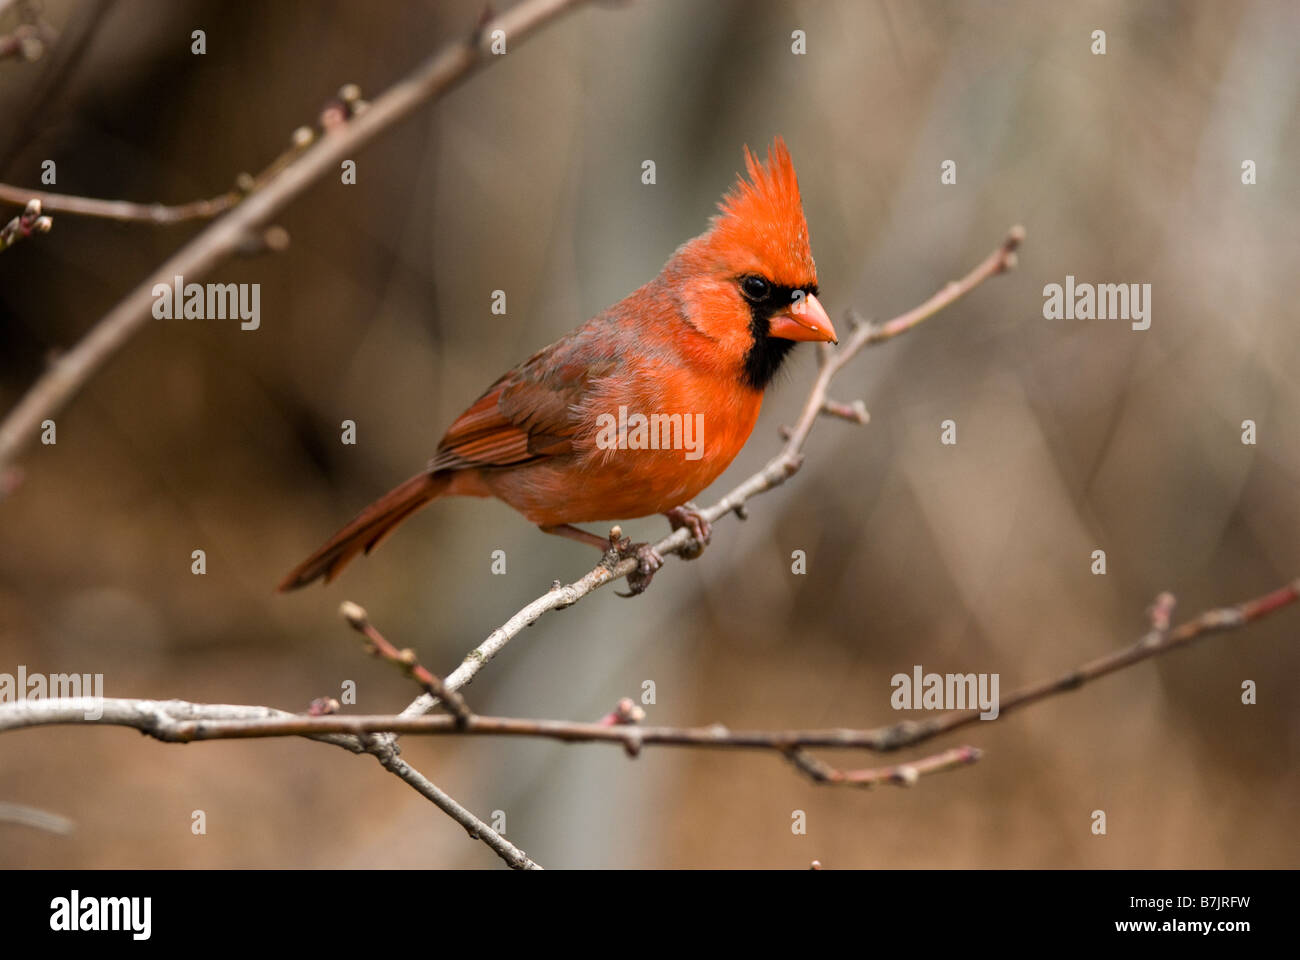 The Northern Cardinal (Cardinalis cardinalis) is a North American bird in the Cardinal family, Central Park New York USA Stock Photo